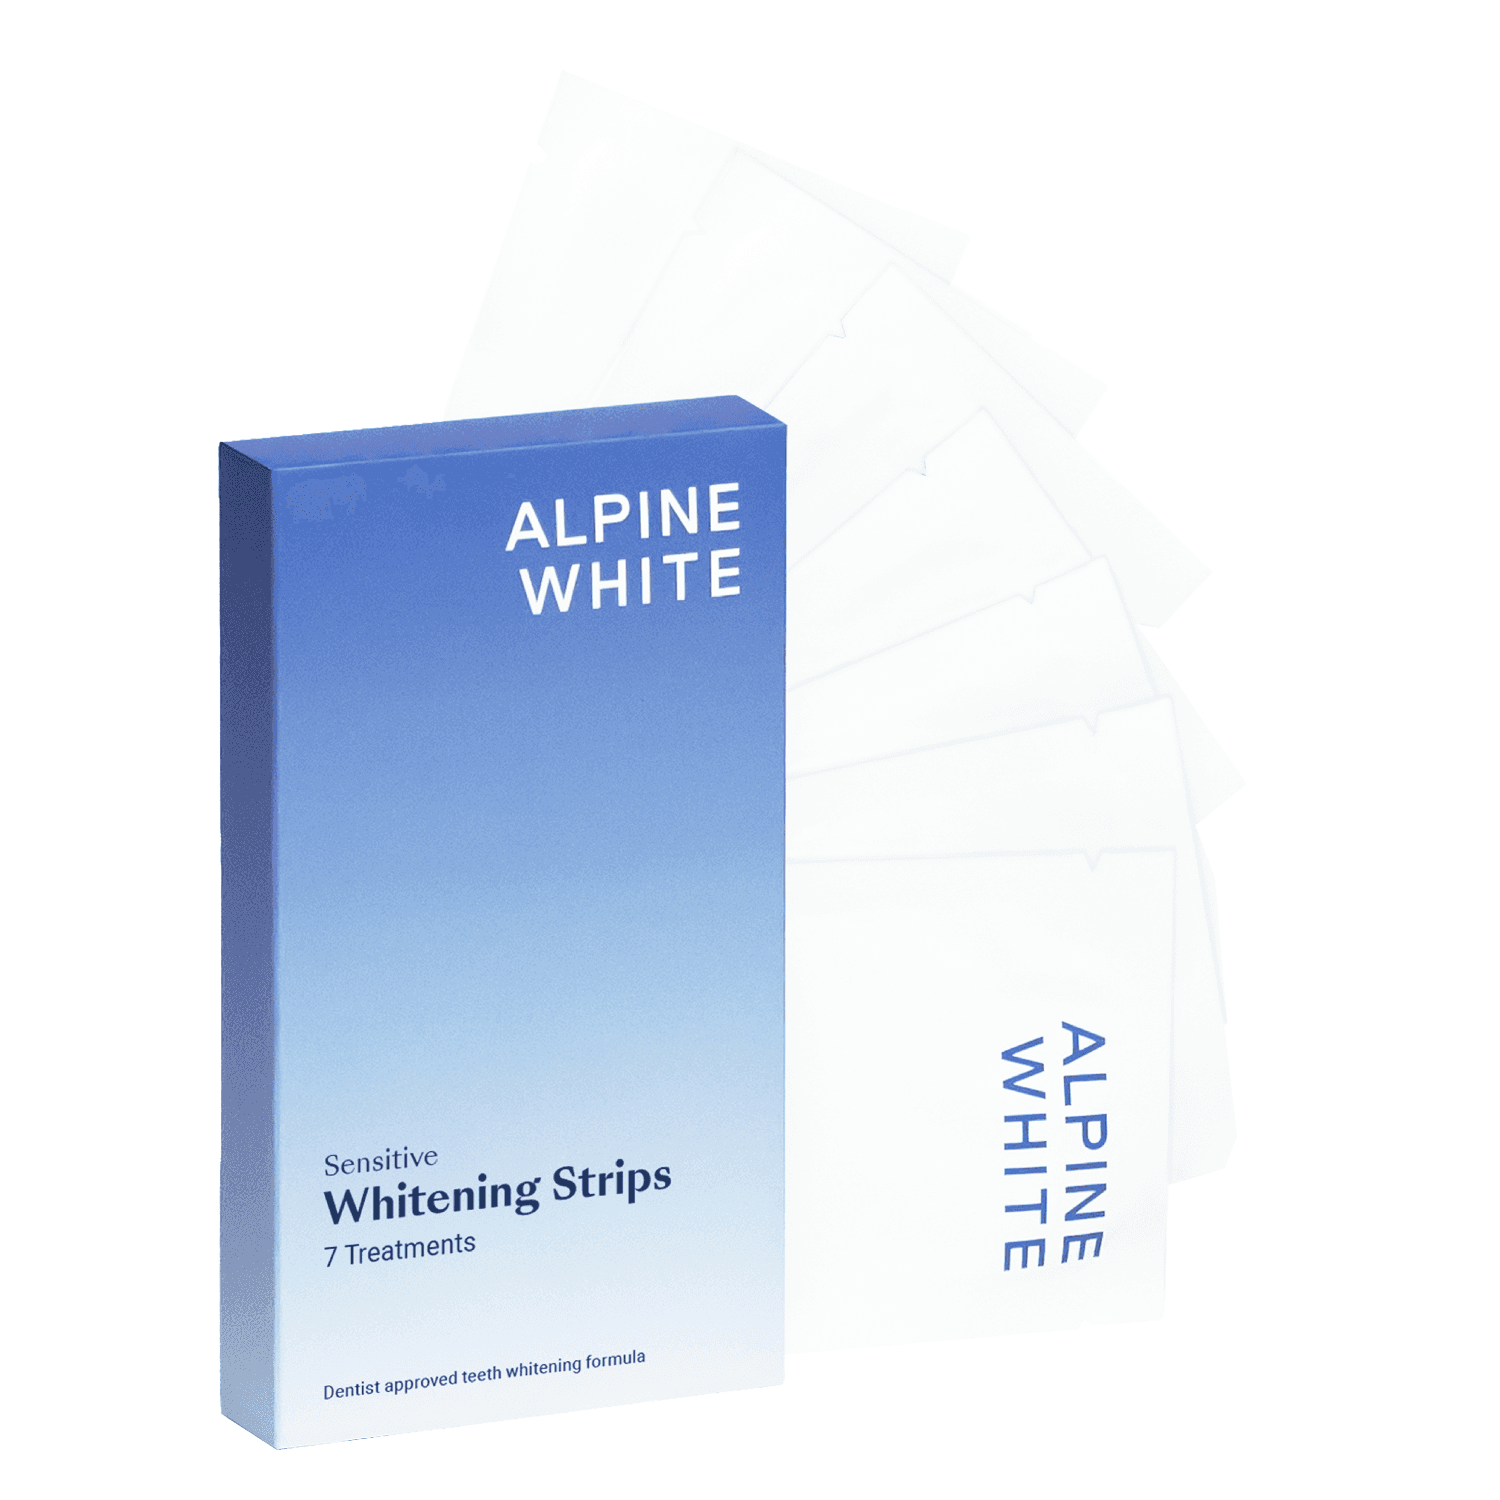 ALPINE WHITE - Whitening Strips Sensitive